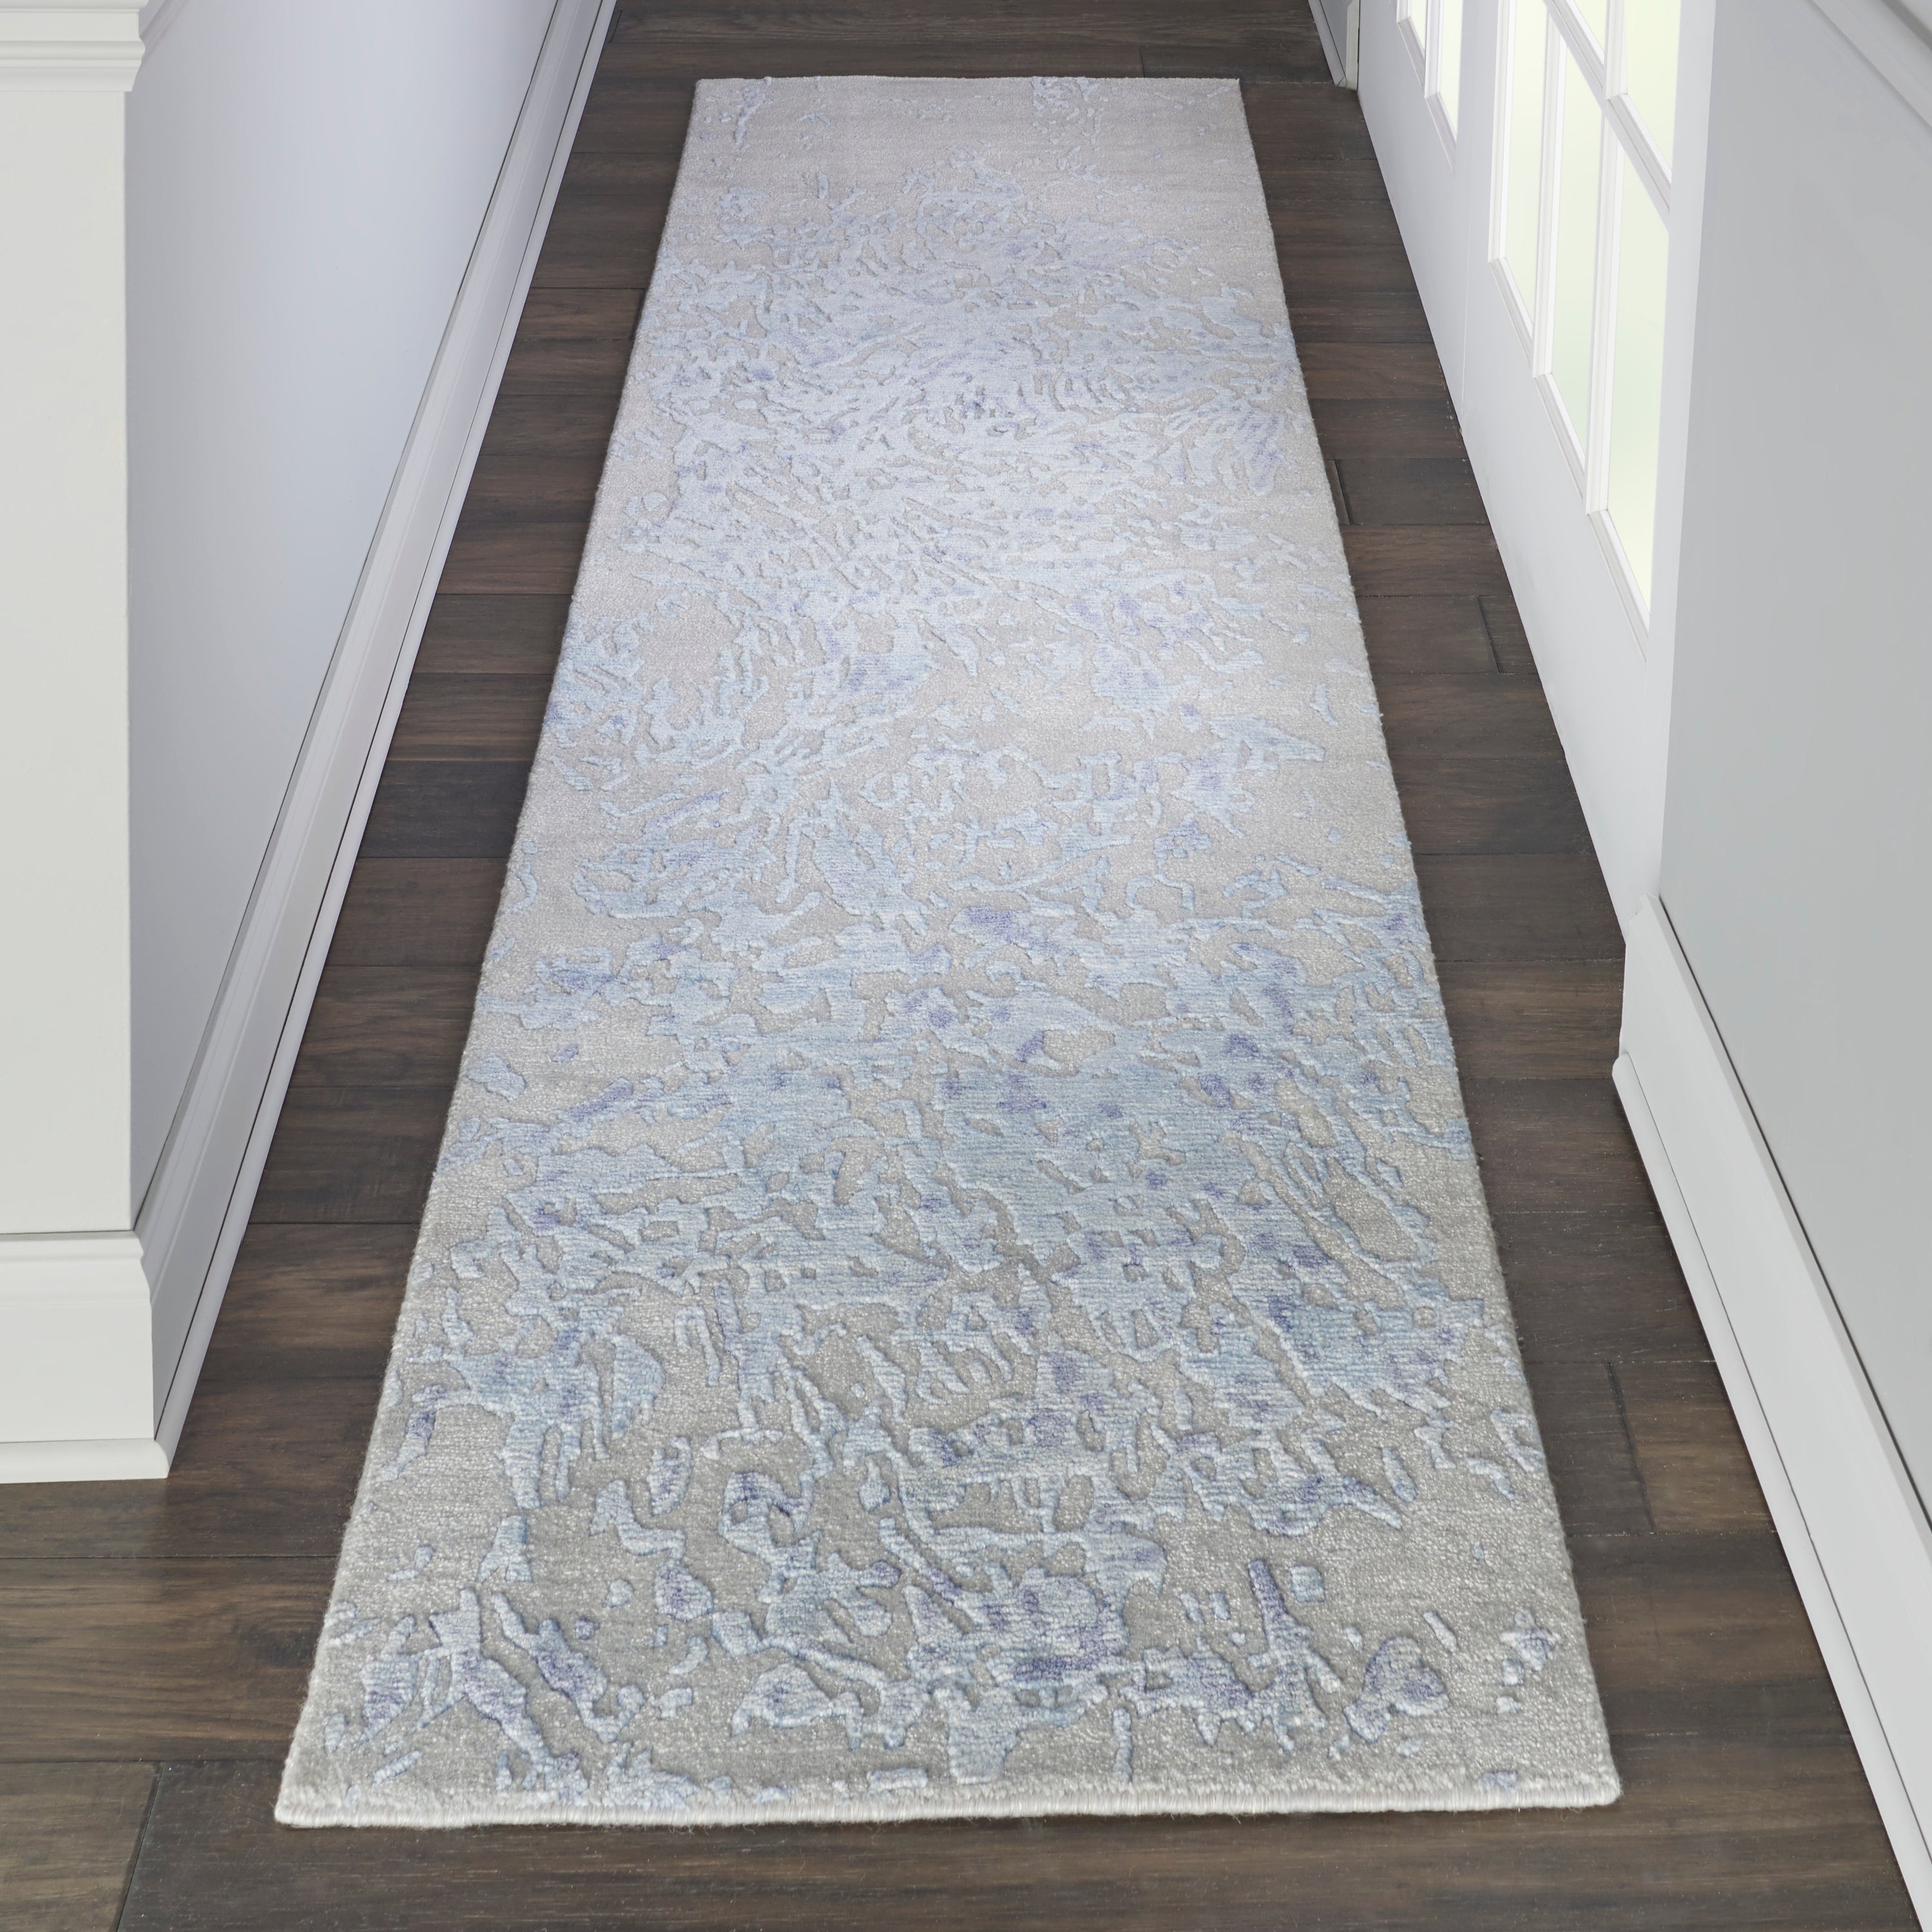 A light-colored, patterned rug lies on a dark hardwood floor.